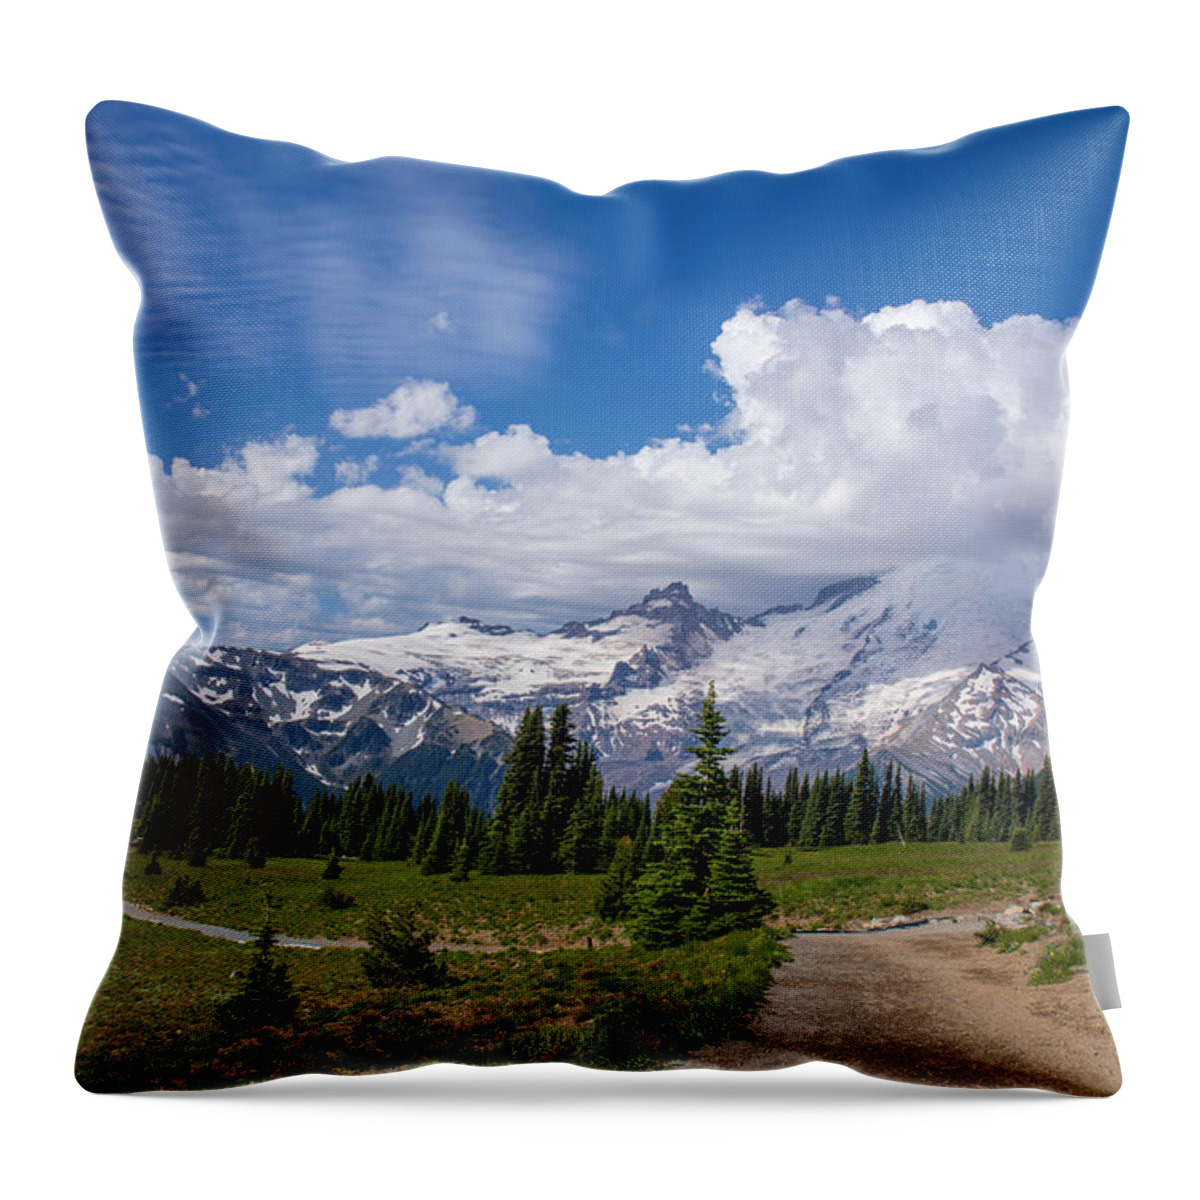 Summer Cloudscape At Mount Rainier Throw Pillow featuring the photograph Summer cloudscape at Mount Rainier by Lynn Hopwood